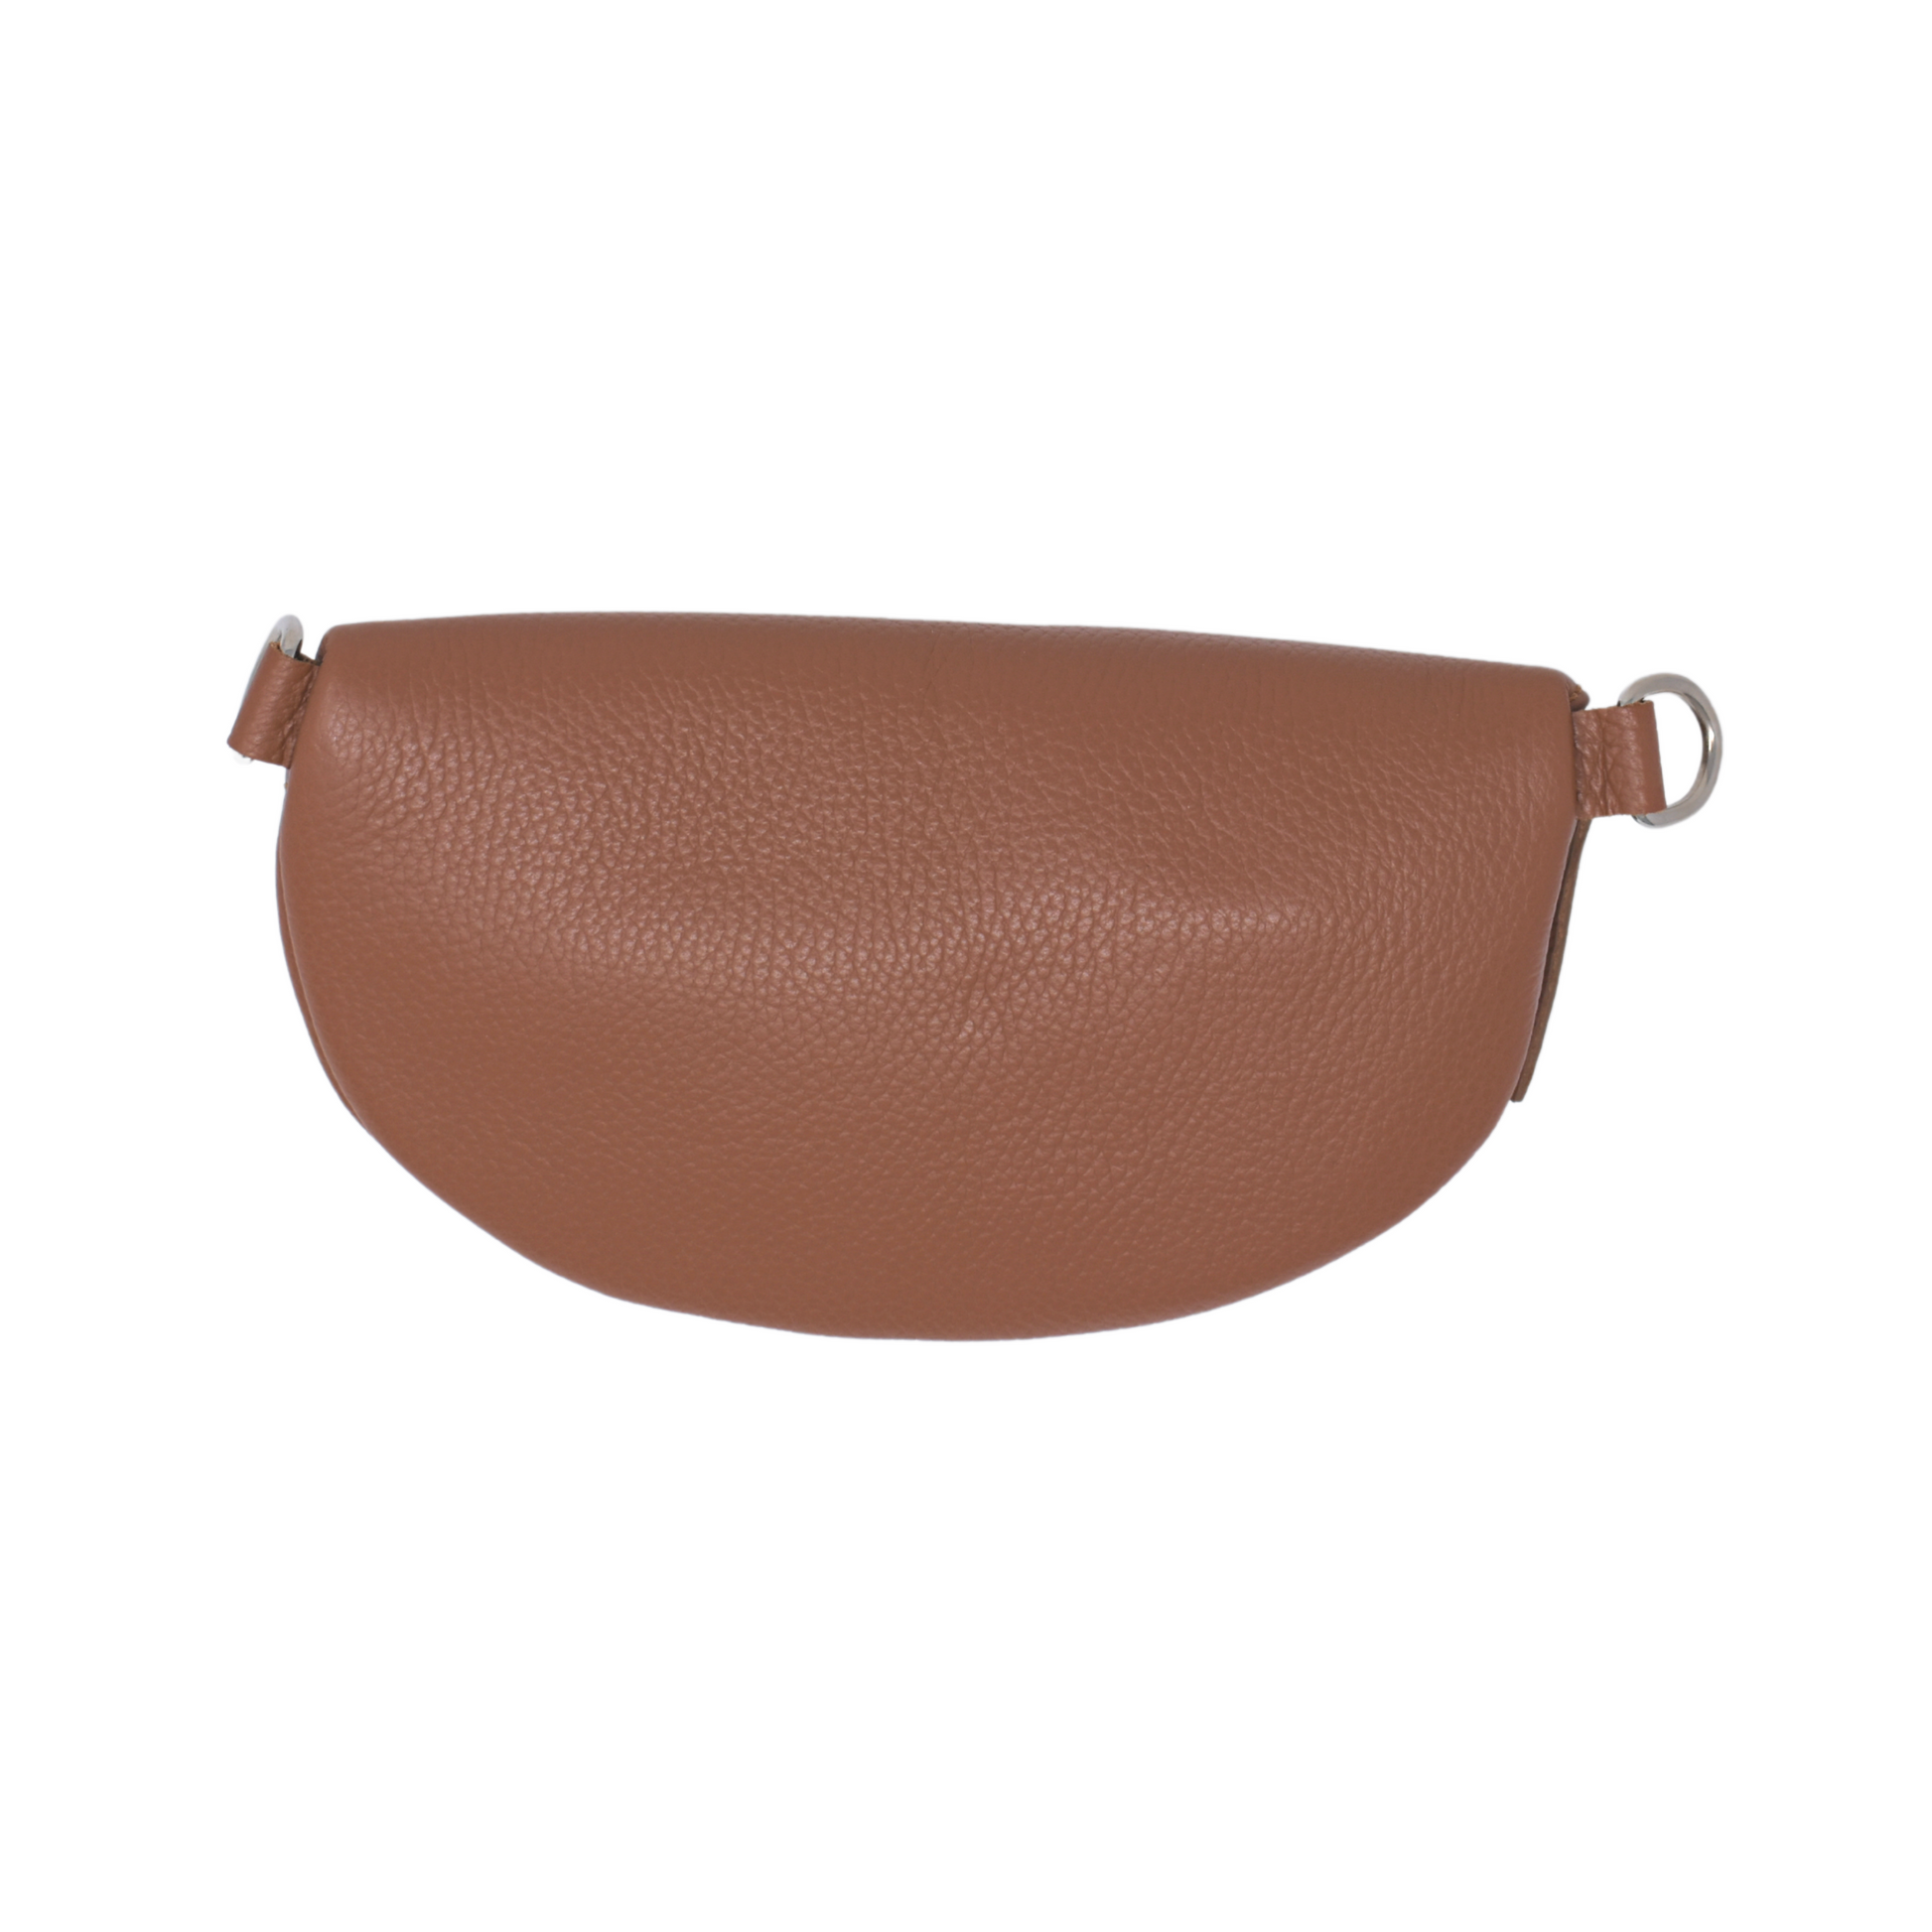 Anna's Items - Top grade belt bag Price:P1300 Size:10